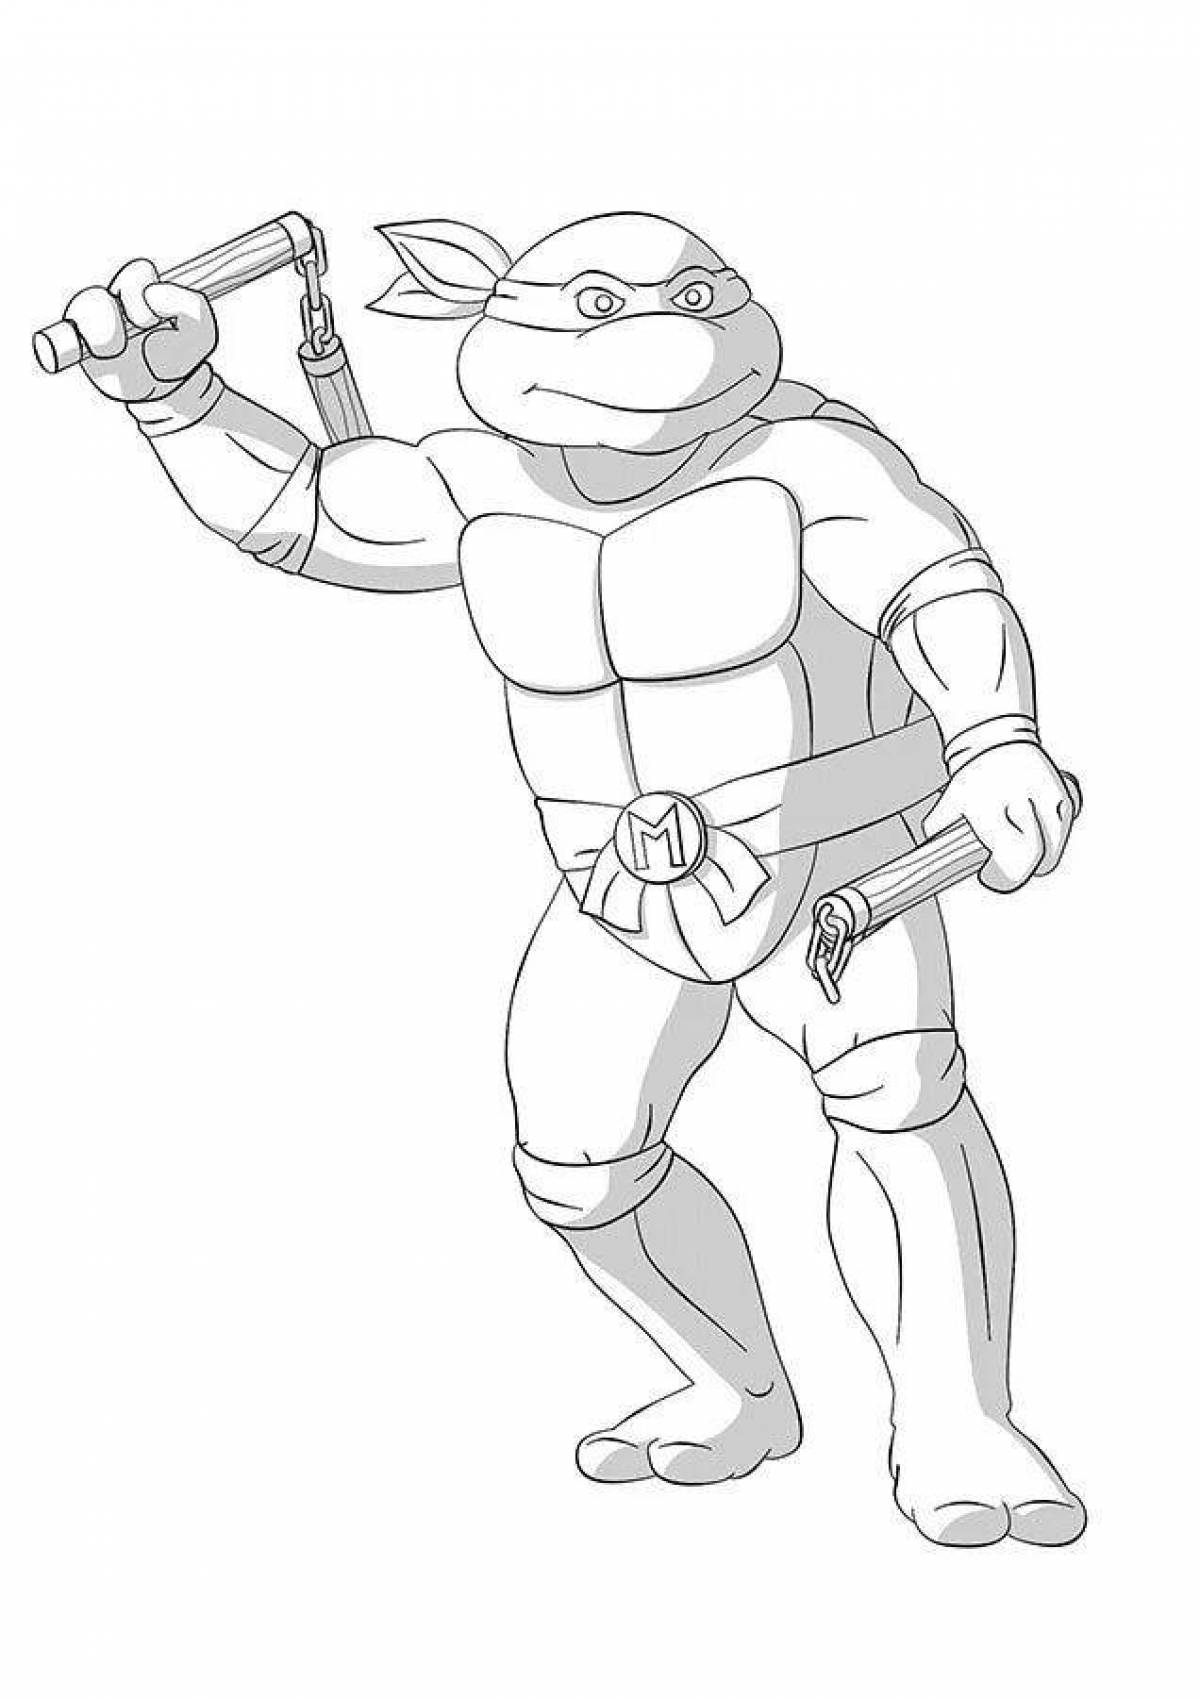 Michelangelo's amazing Teenage Mutant Ninja Turtles